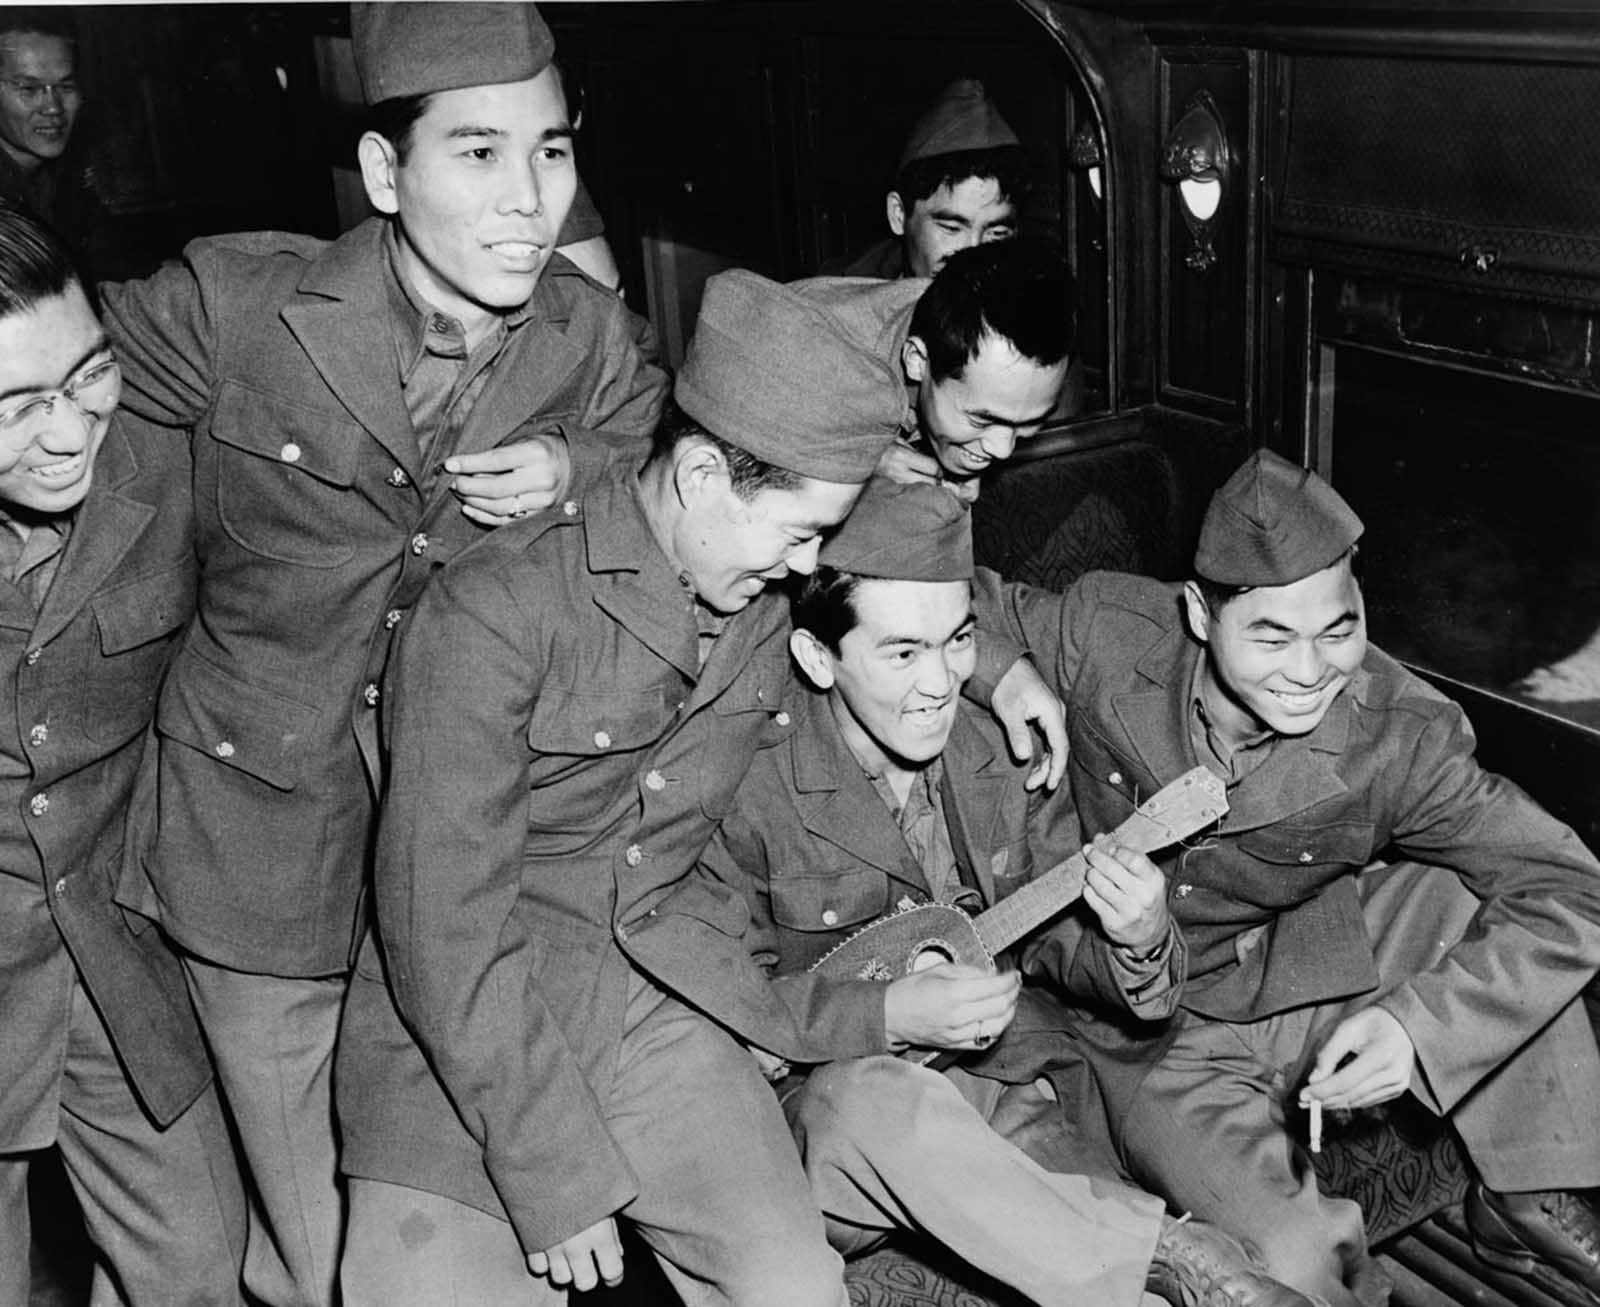 Soldiers enjoy ukulele music while awaiting orders. 1943.